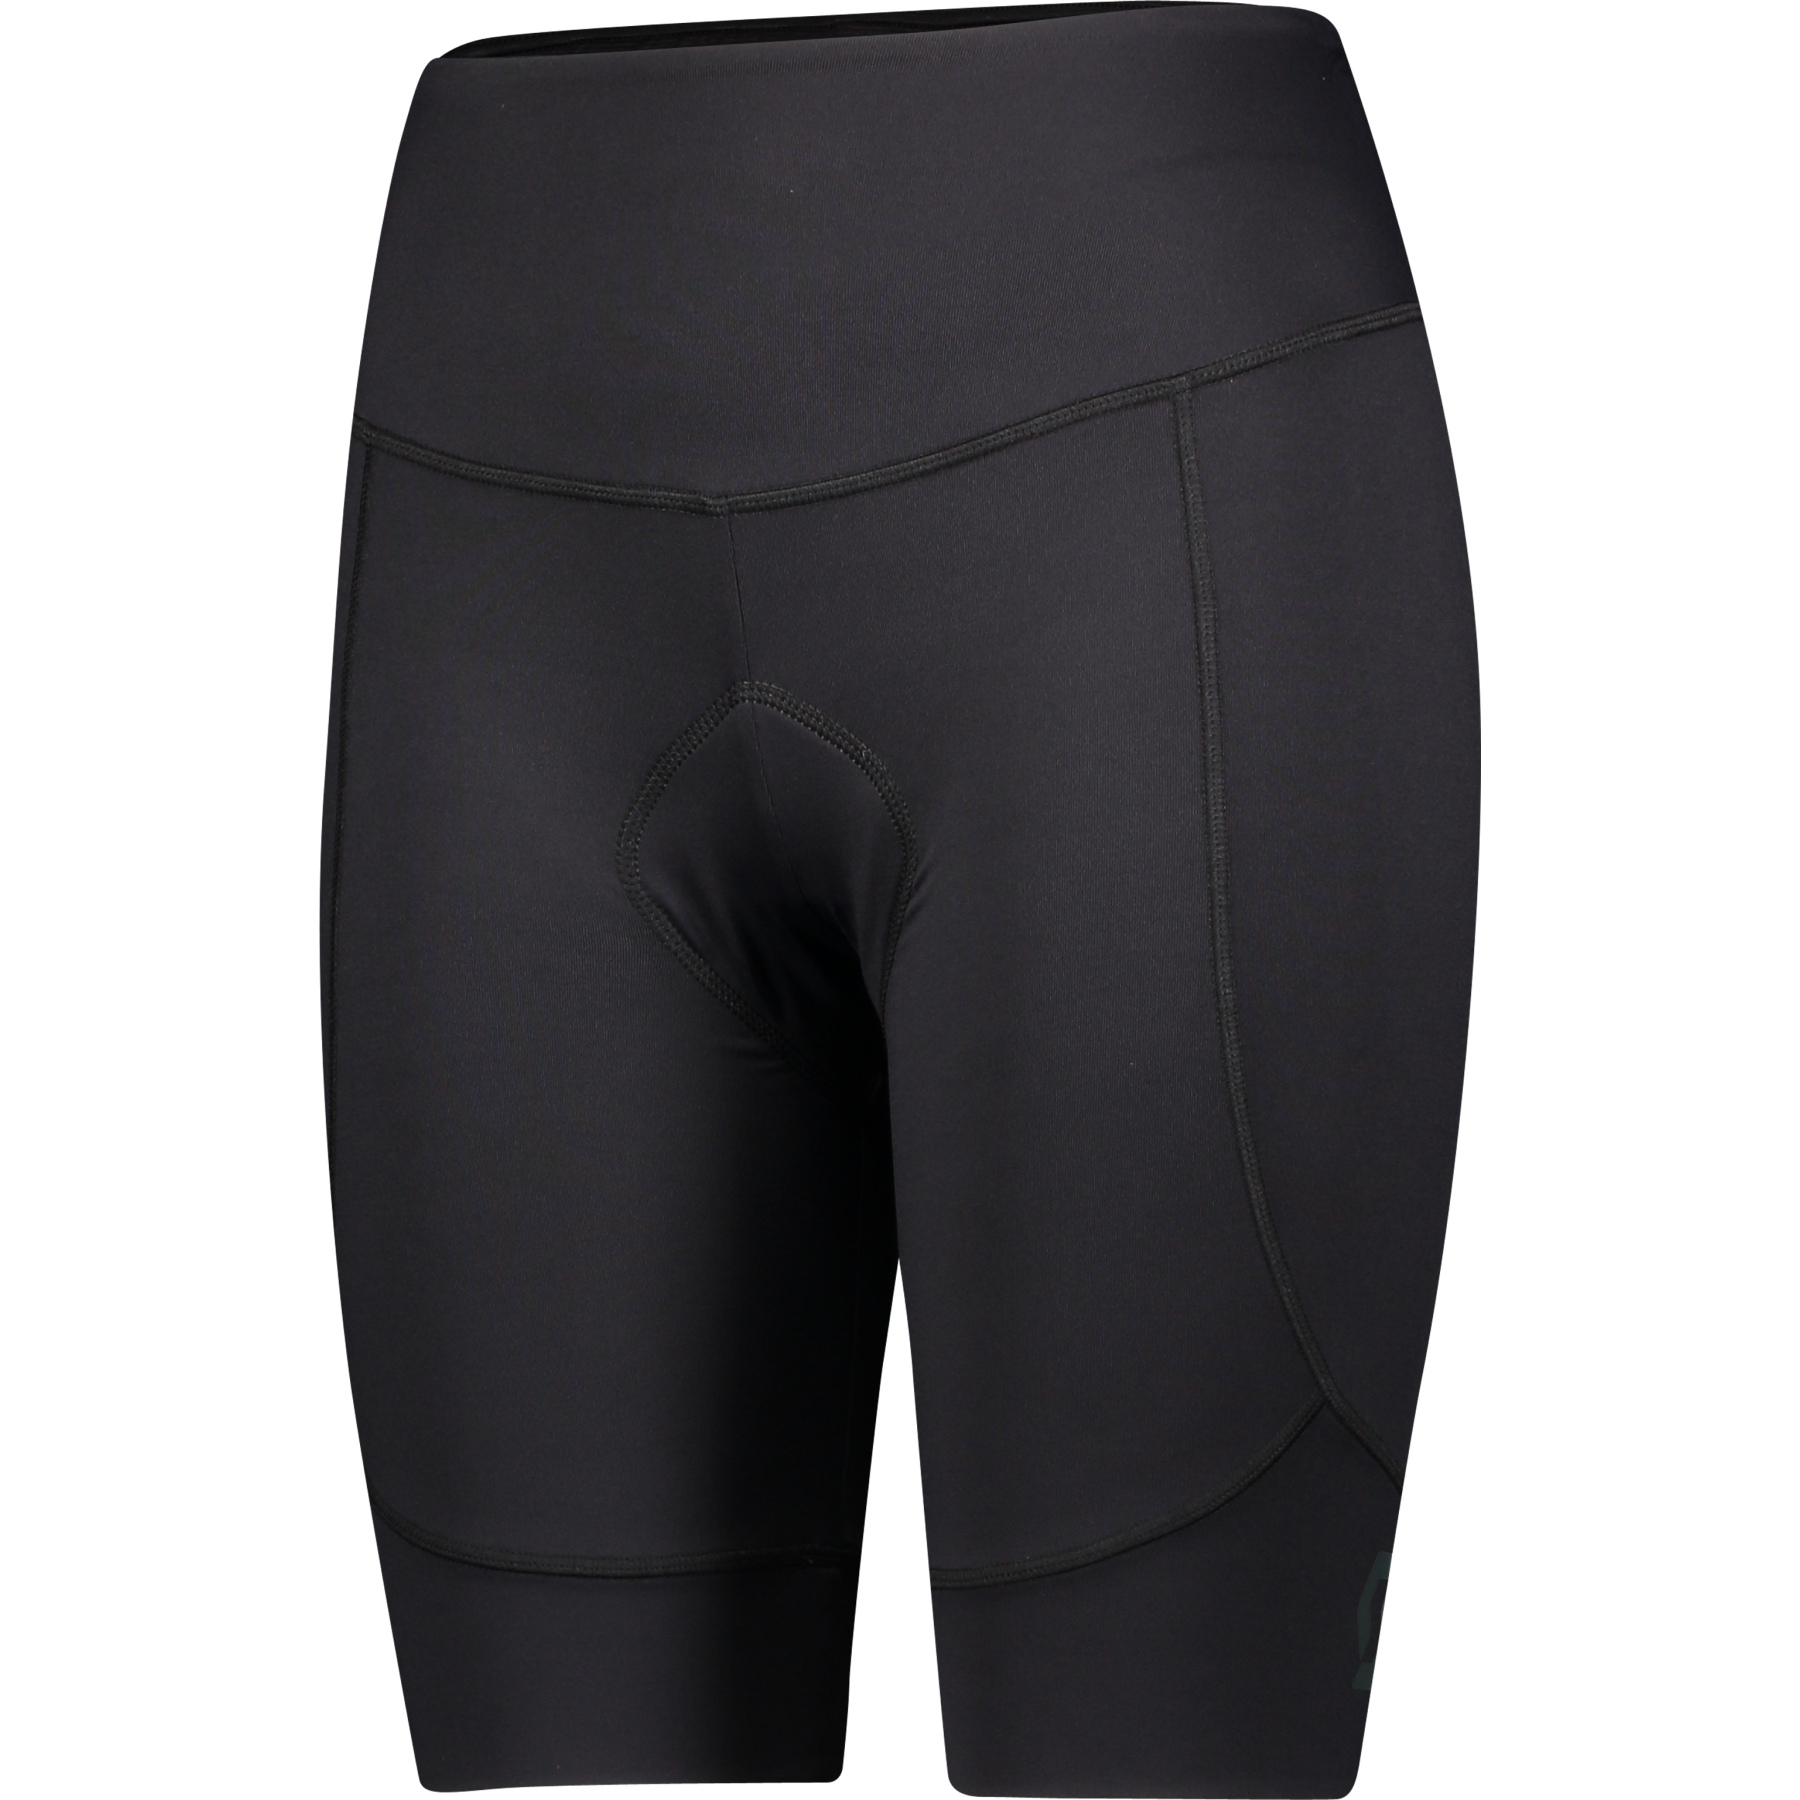 Image of SCOTT Endurance 10 +++ Women's Bike Shorts - black/dark grey